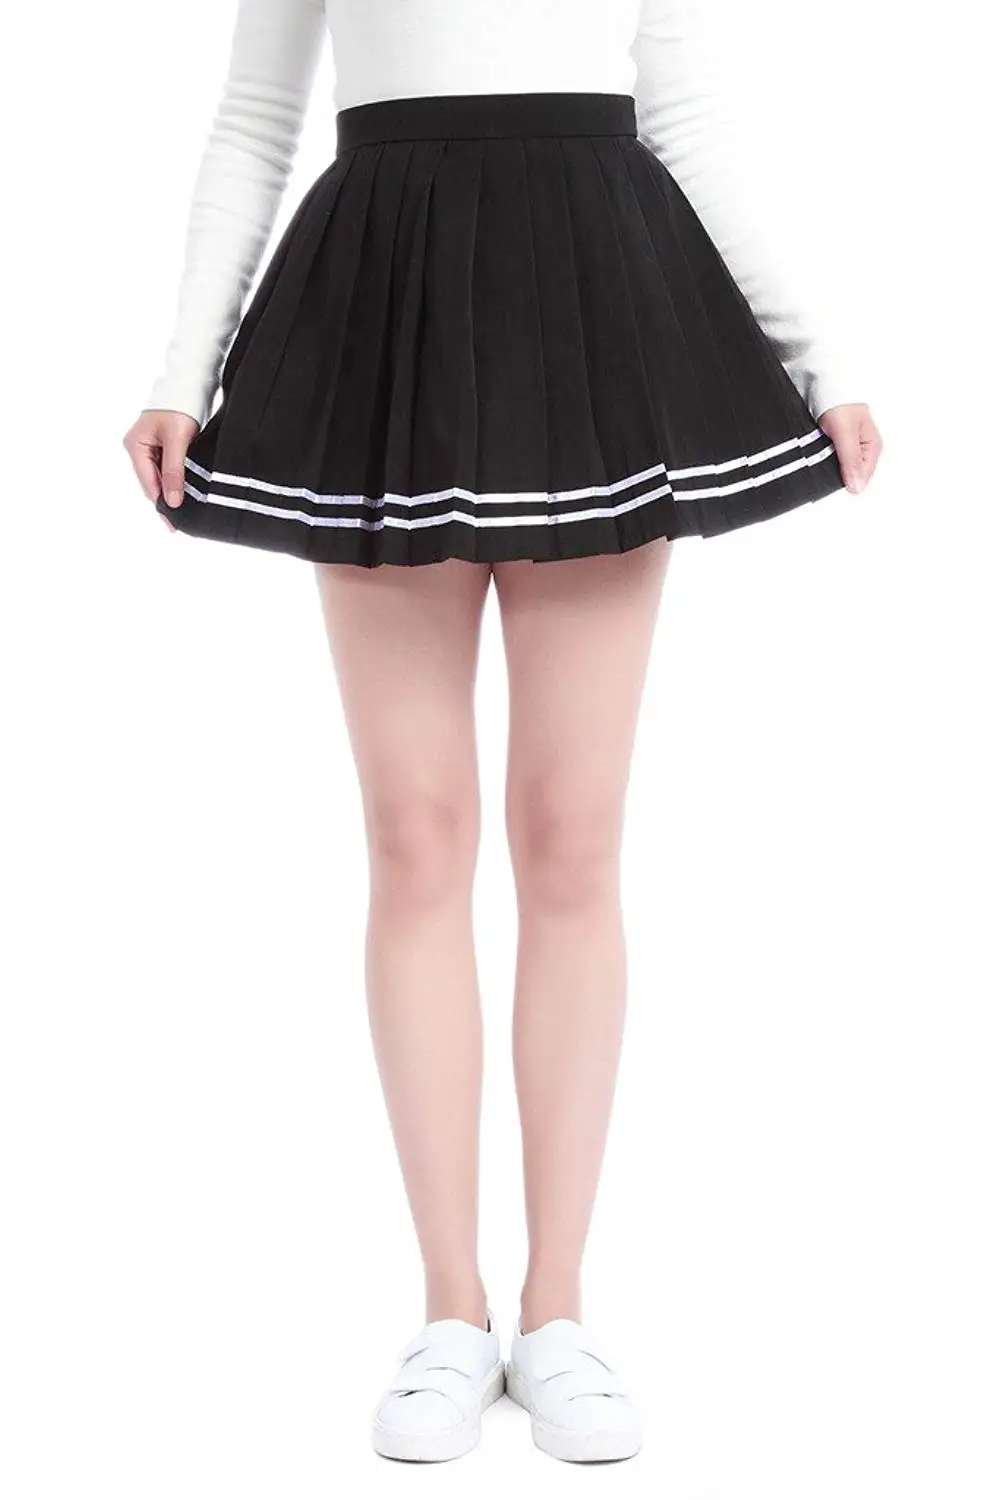 Buy Lemail Japanese Schoolgirl Skirt School Uniform High Waisted ...